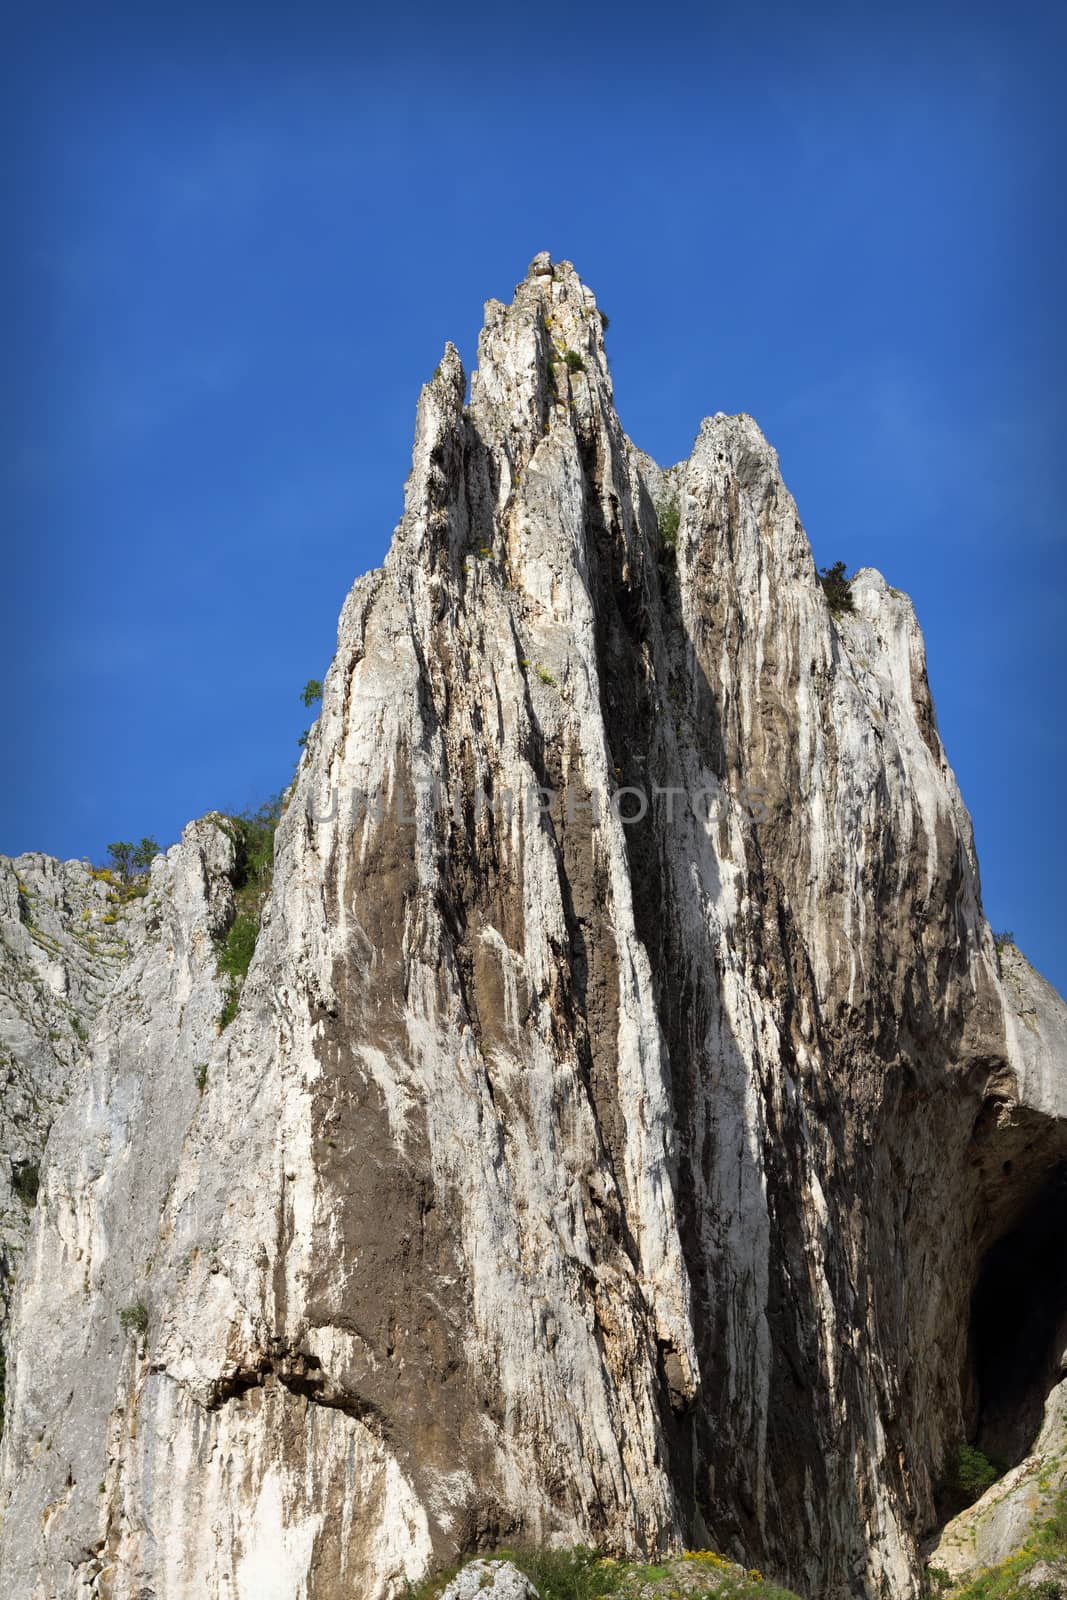 Beautiful limestone wild ridge in Turzii gorge, Romania. This interesting natural stone is called The Sharp Tower